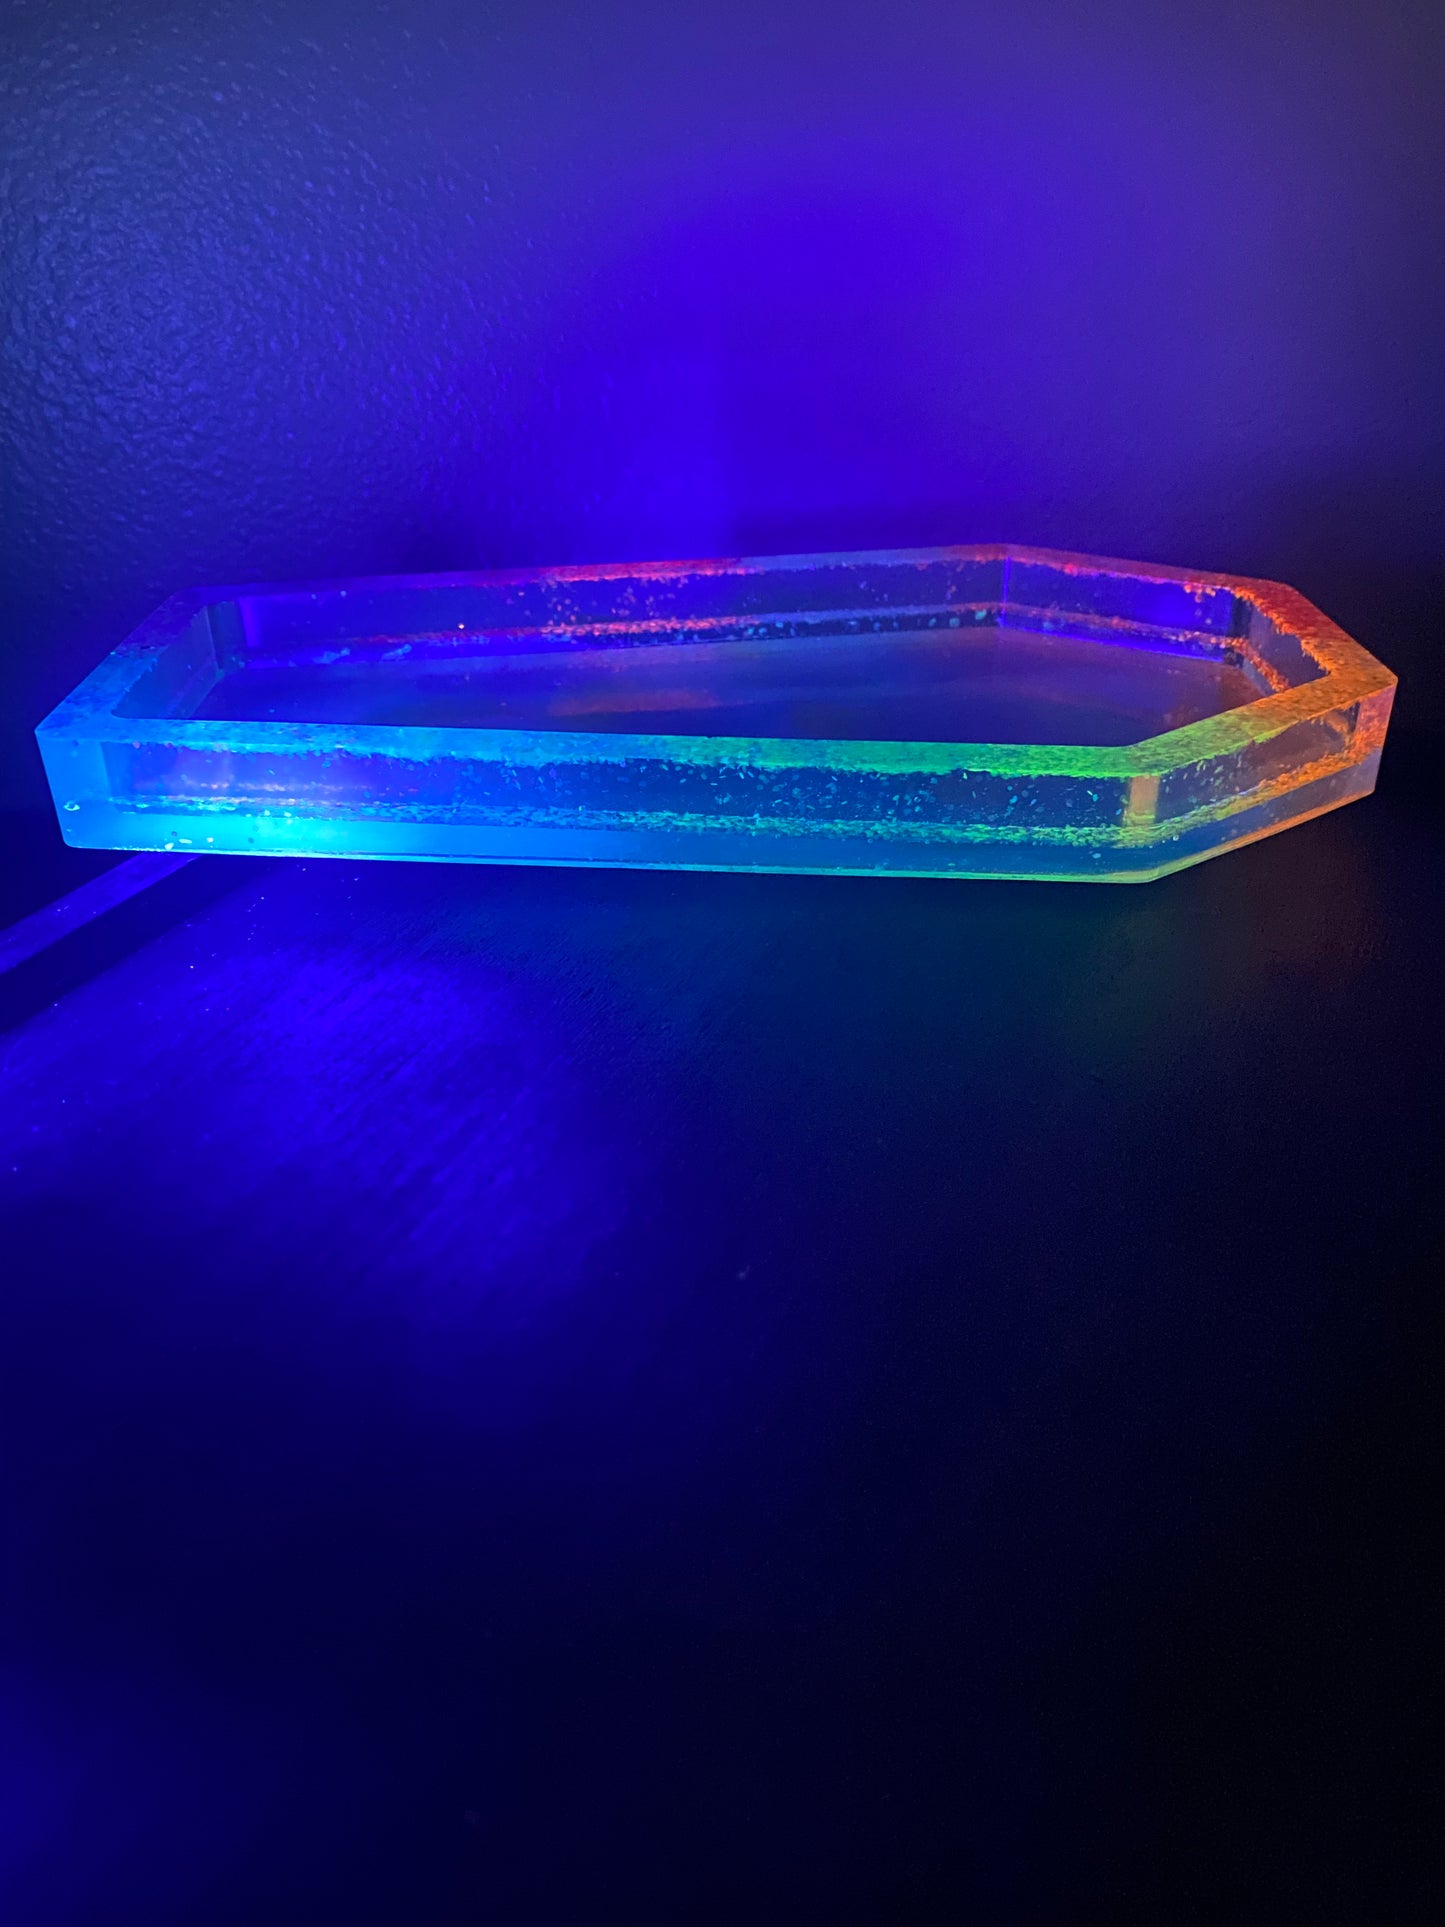 Fluorescent Blacklight Rainbow Sparkle Coffin Catch-All Dish Tray